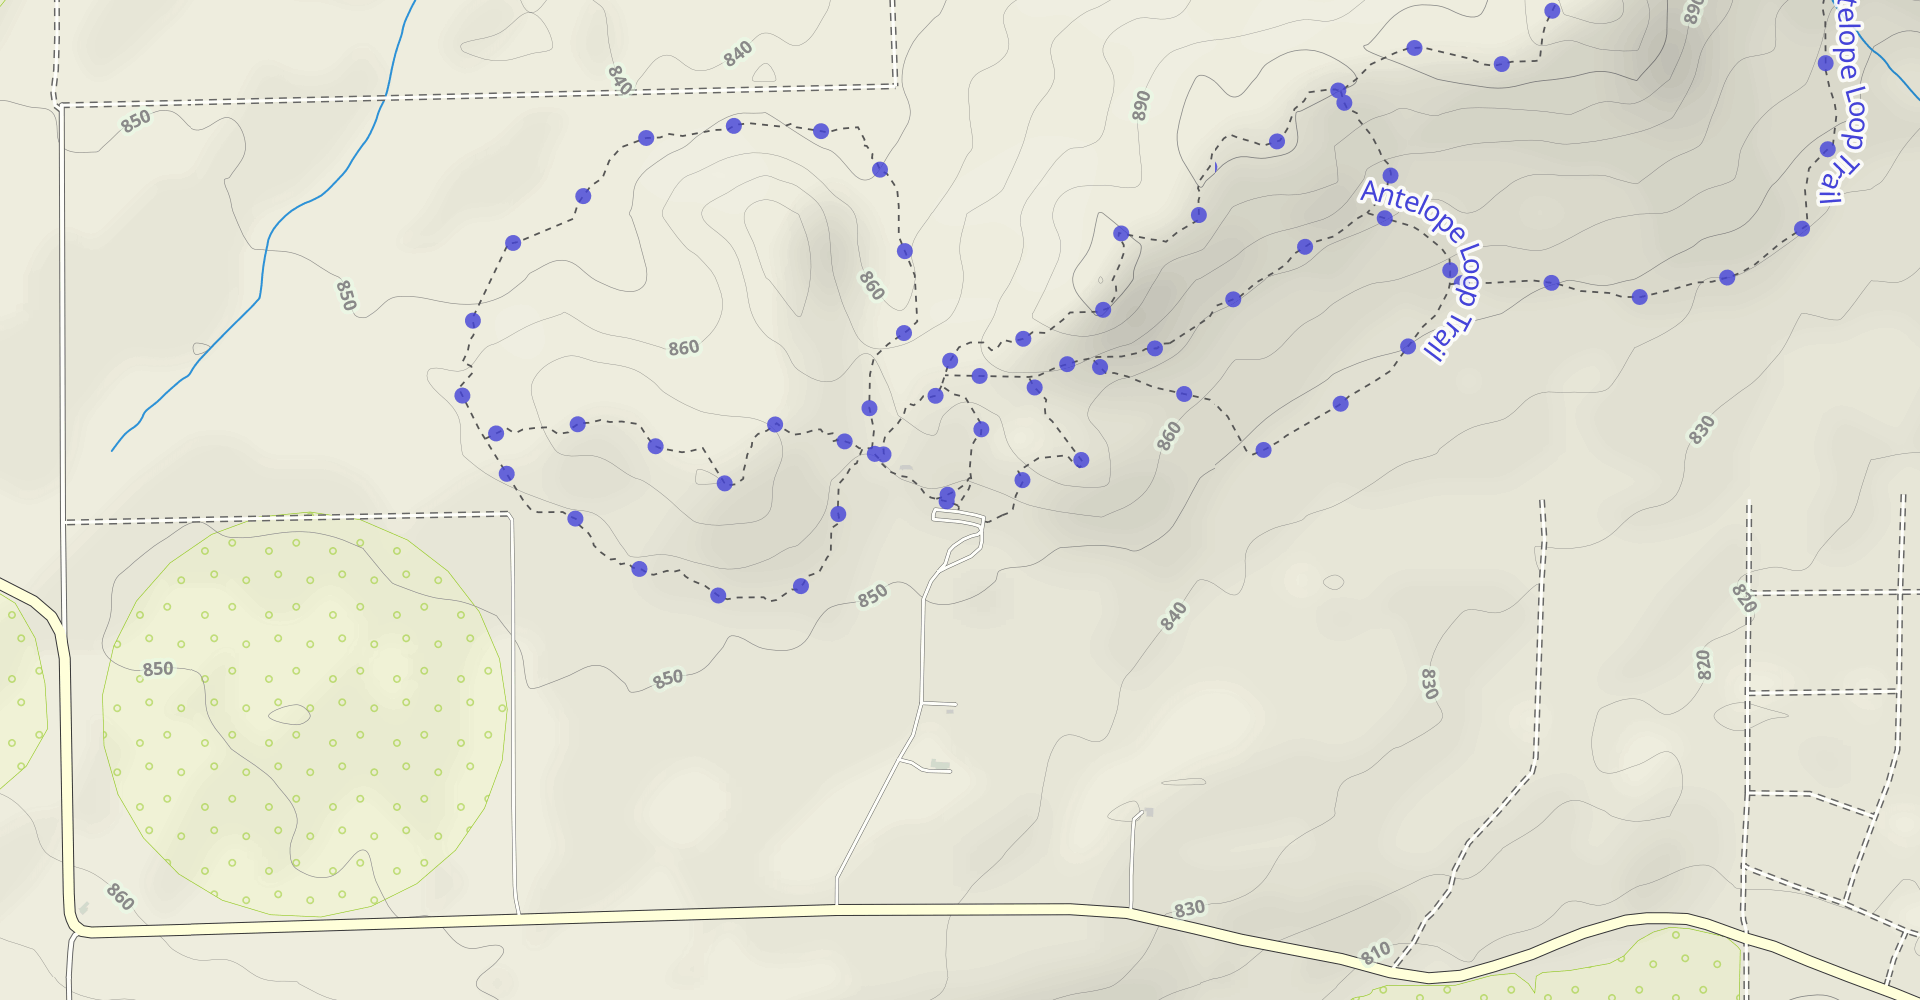 North Loop, Antelope Butte and Lightning Bolt Loop